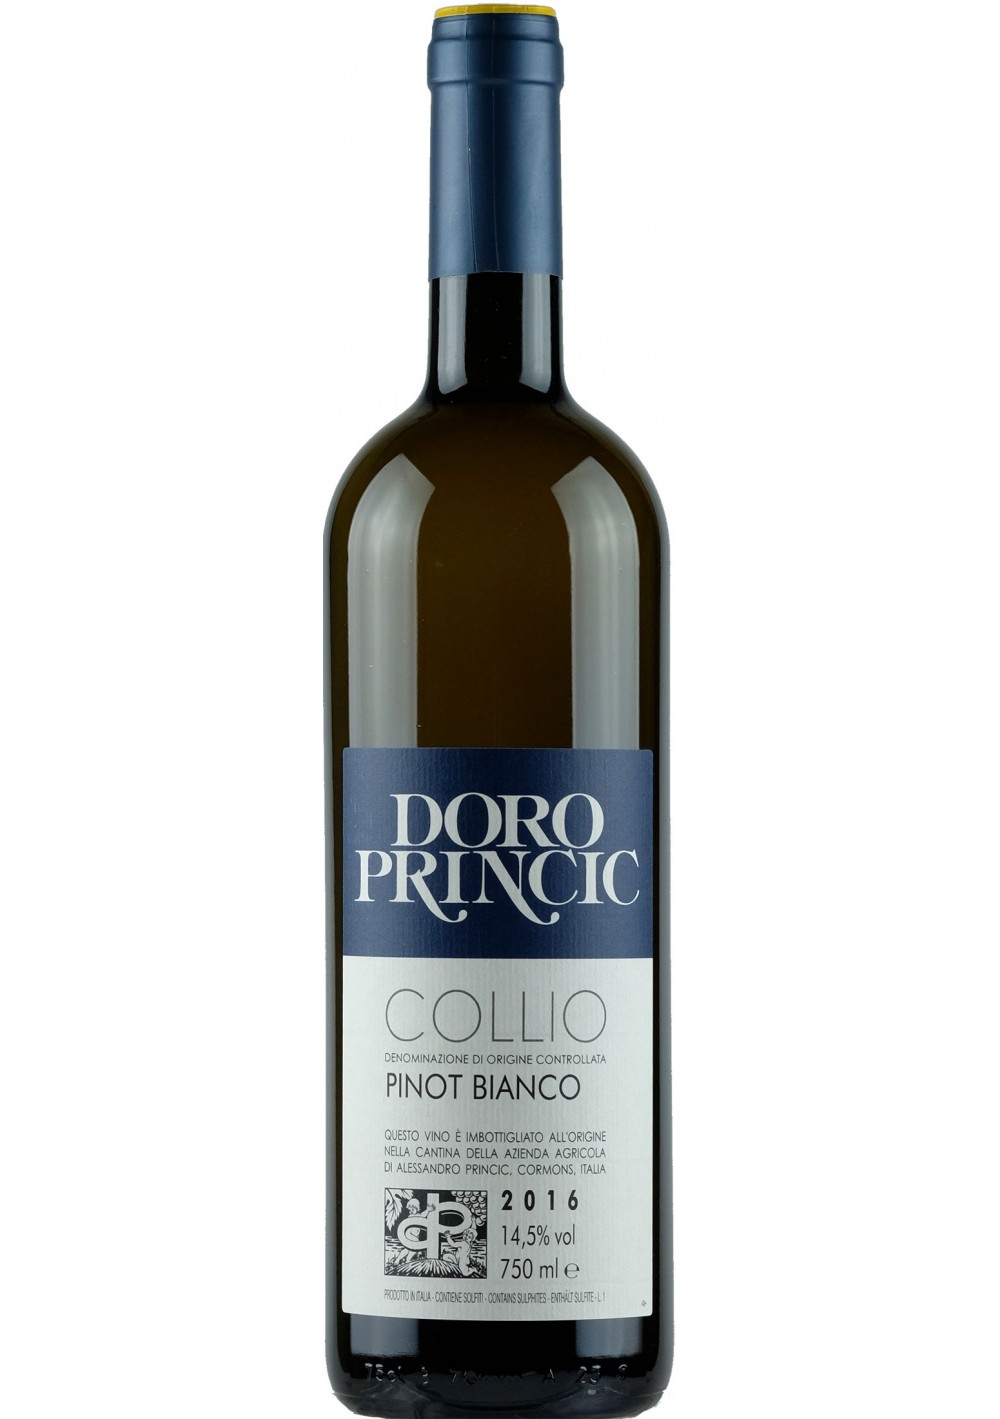 Doro Princic Collio Pinot Bianco 2016